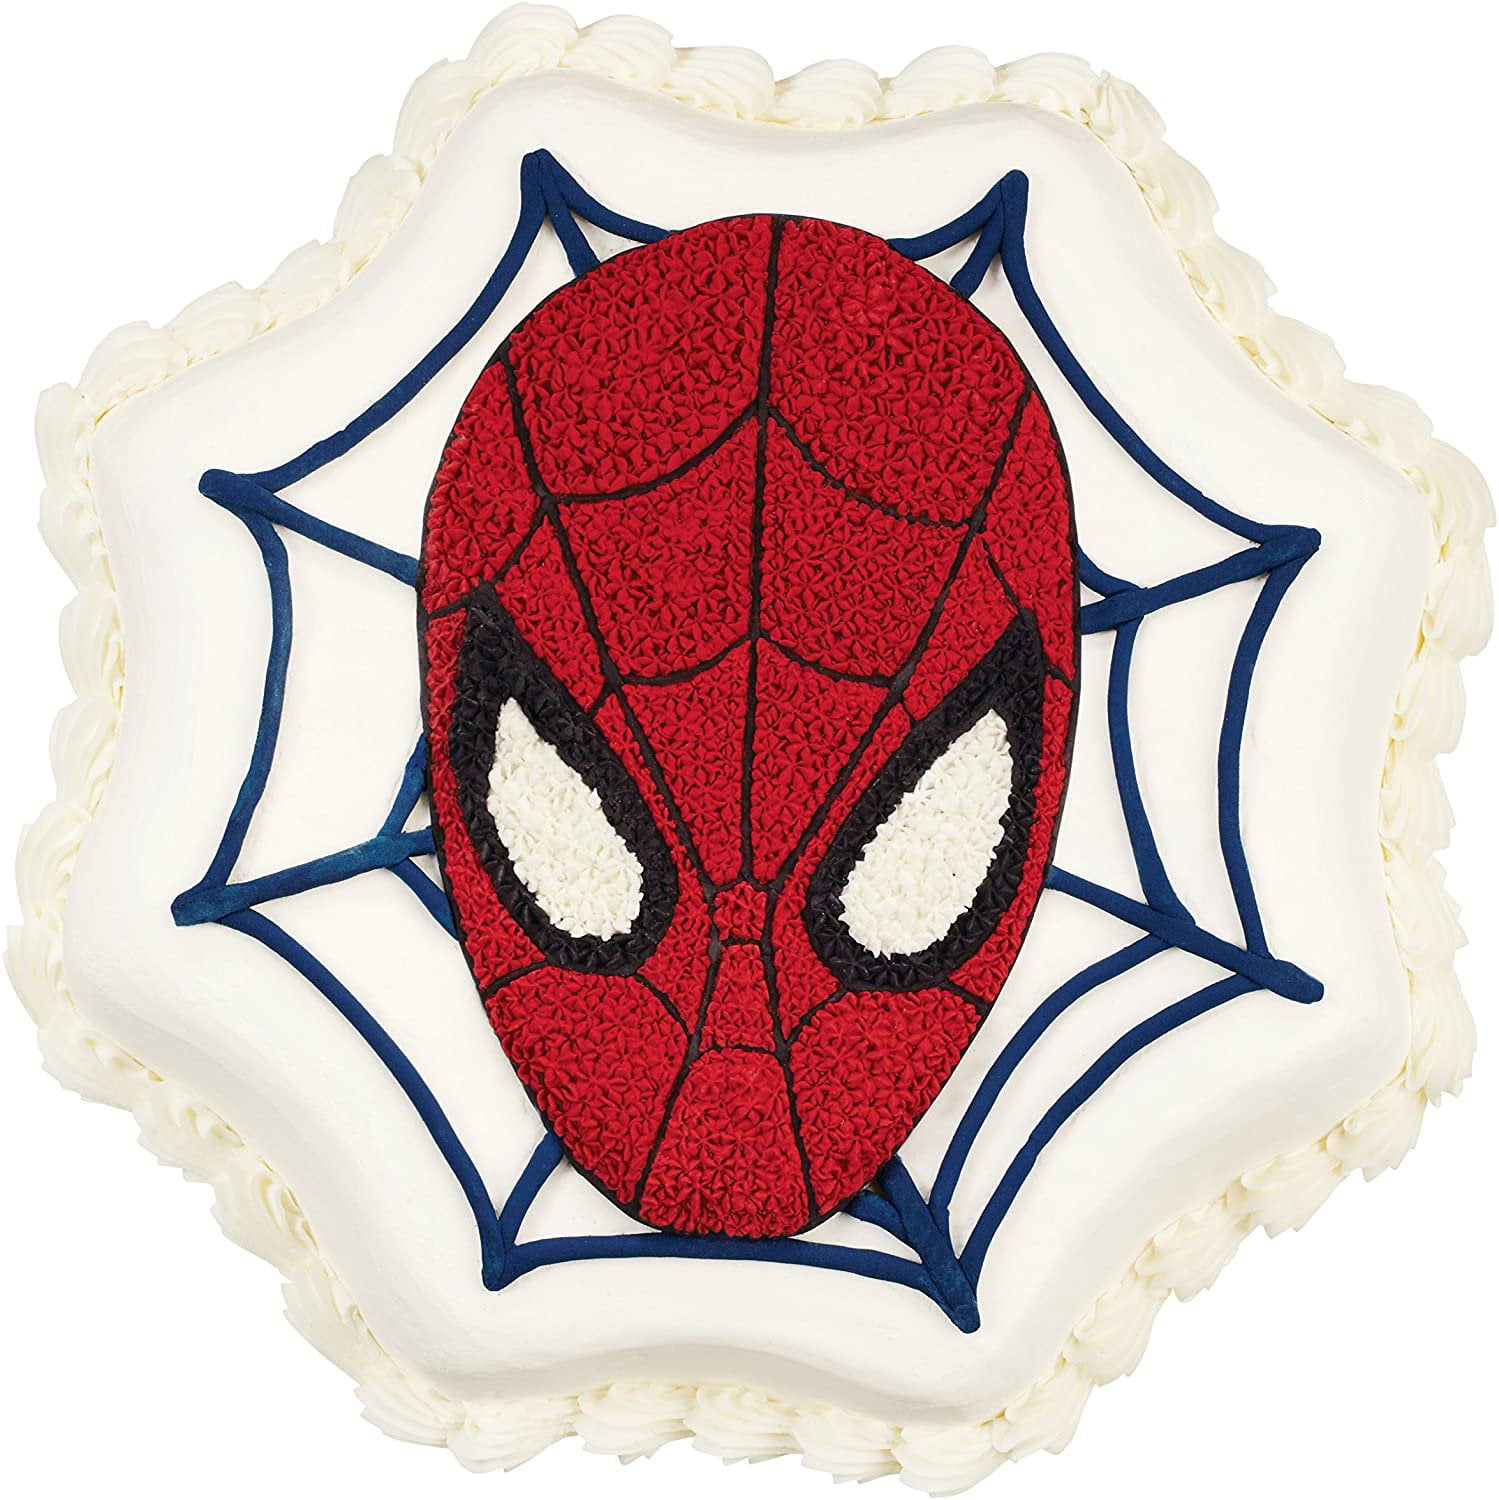 Spiderman Designer Prints Cake Edible Image - Walmart.com